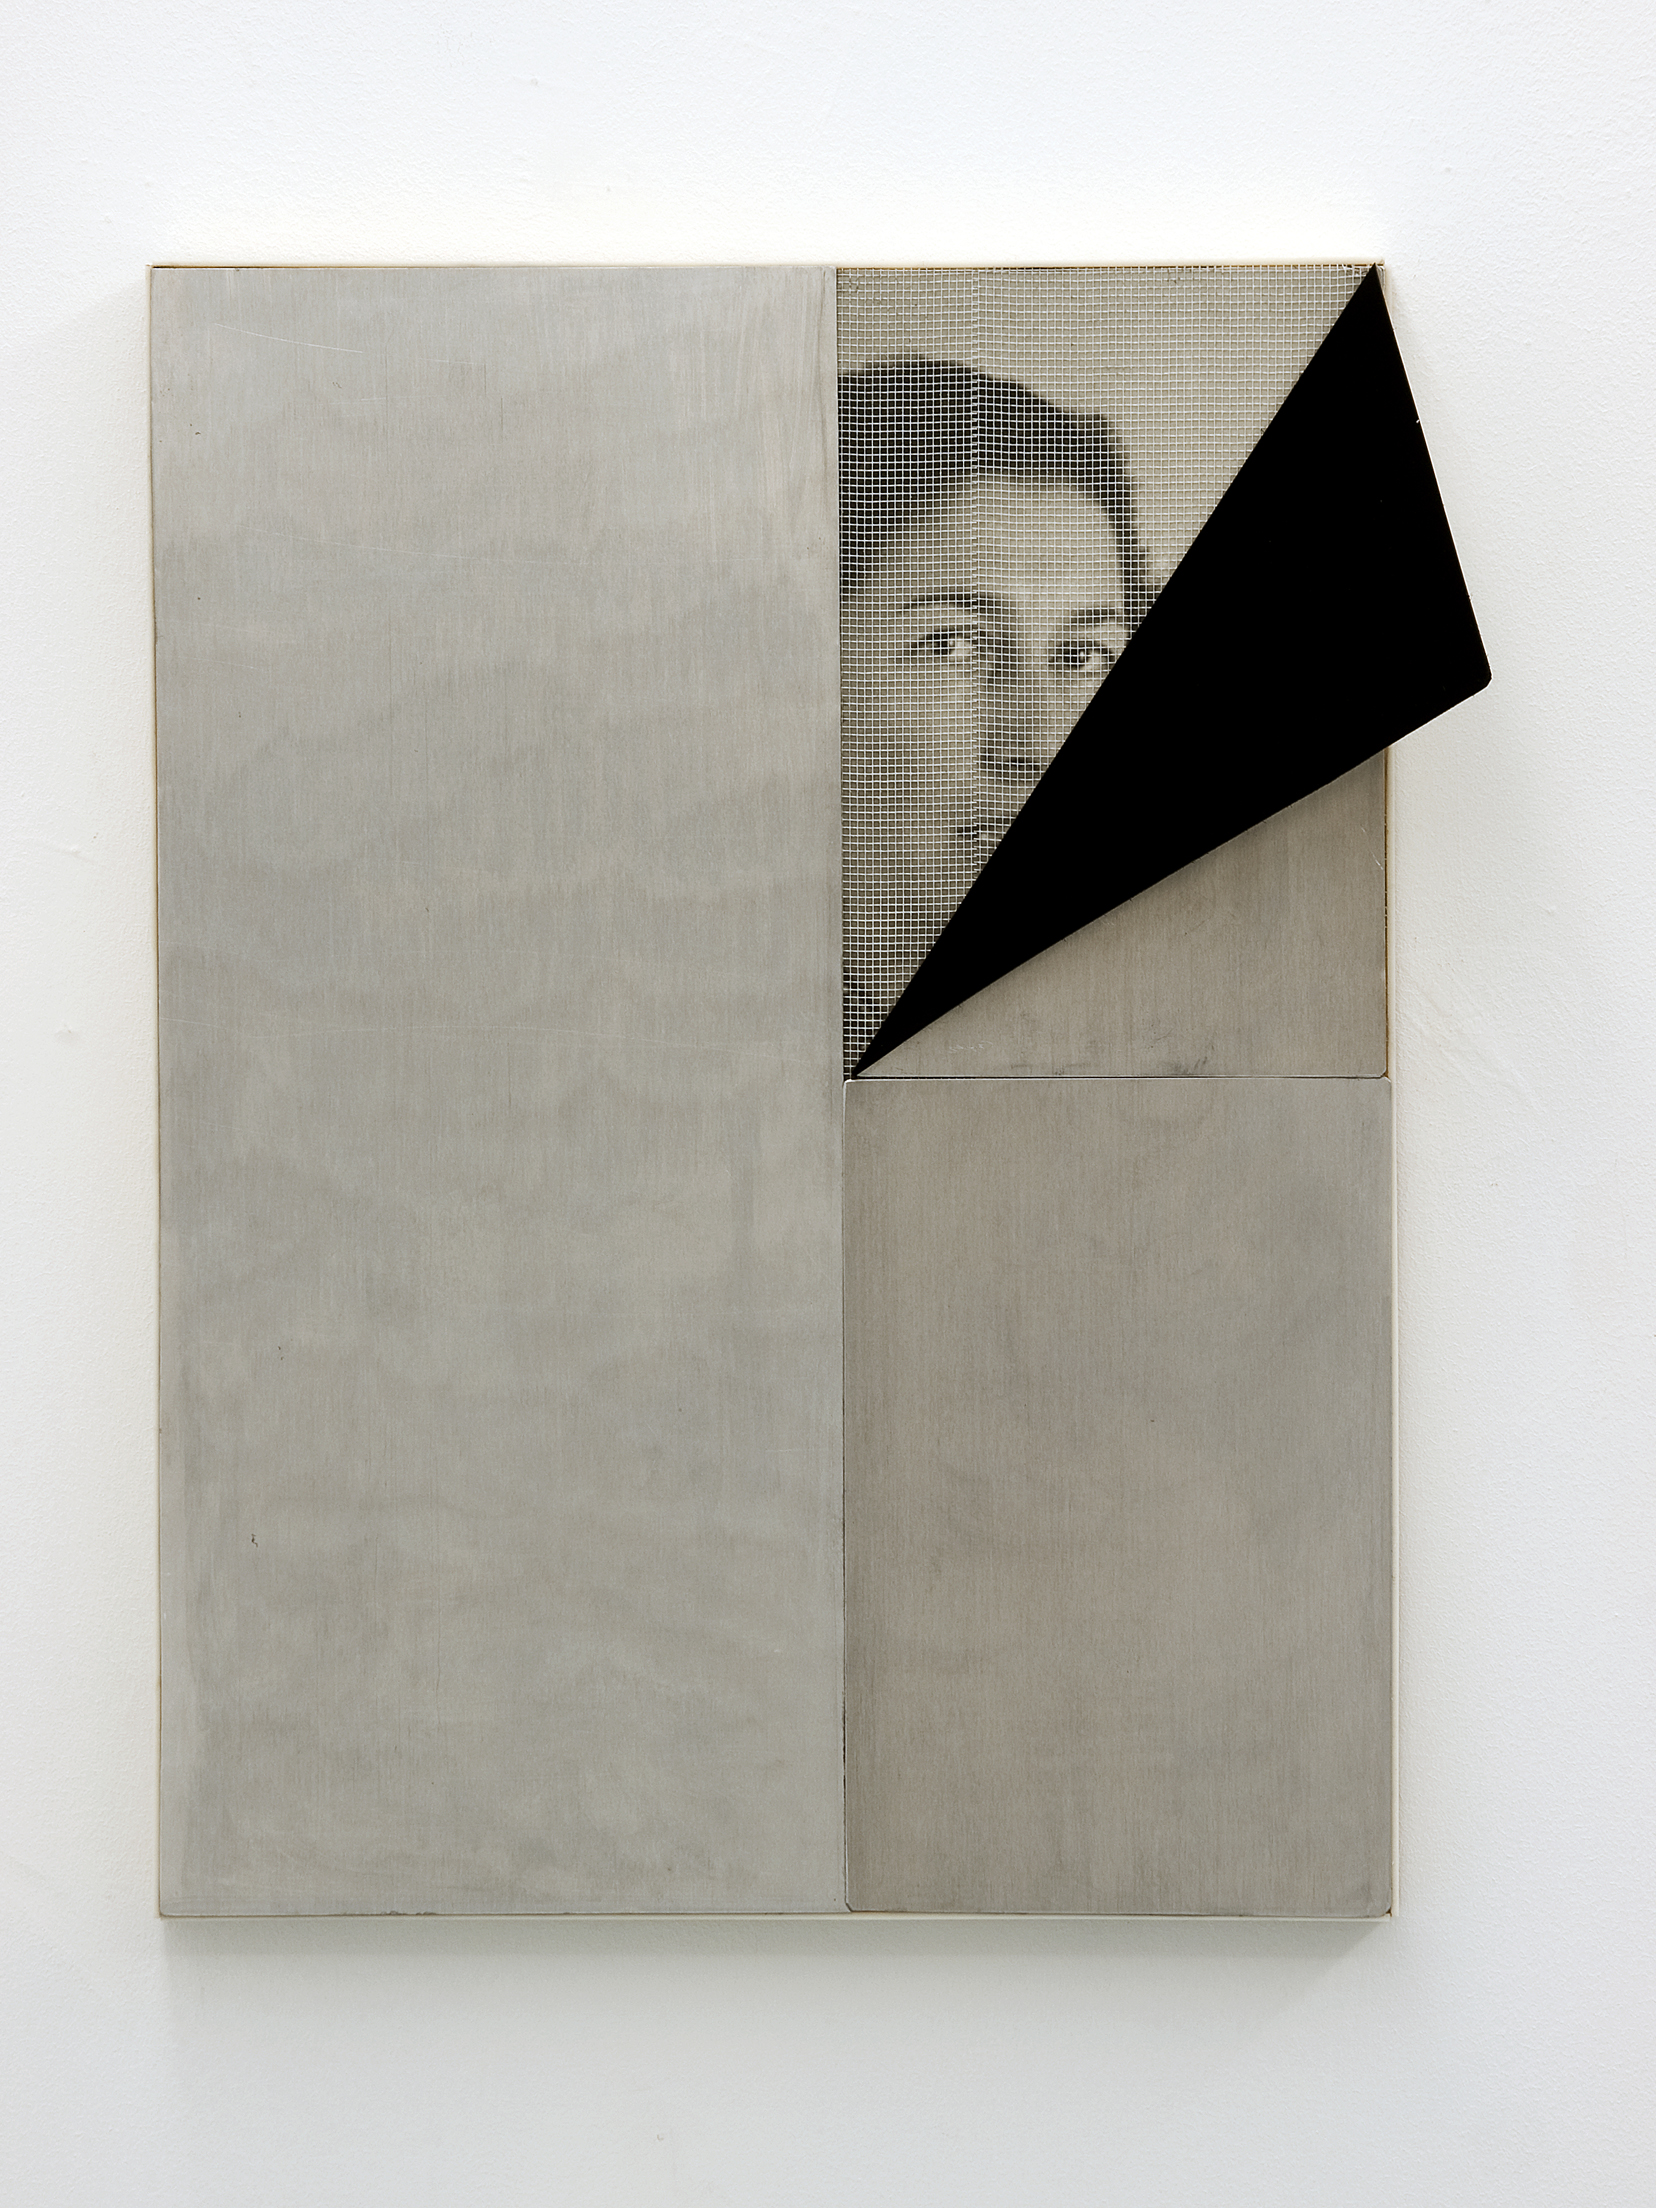   Pablo Jansana © 2012 ,  Fall and fold, Untitled #13 (Gisele Freund) . Epson Ultrachrome Pro 4880, resin, &nbsp;aluminium, enamel, fiberglass, plexiglass, MDF. 60.5 x 45 x 15.5 cm. Courtesy of the artist. 